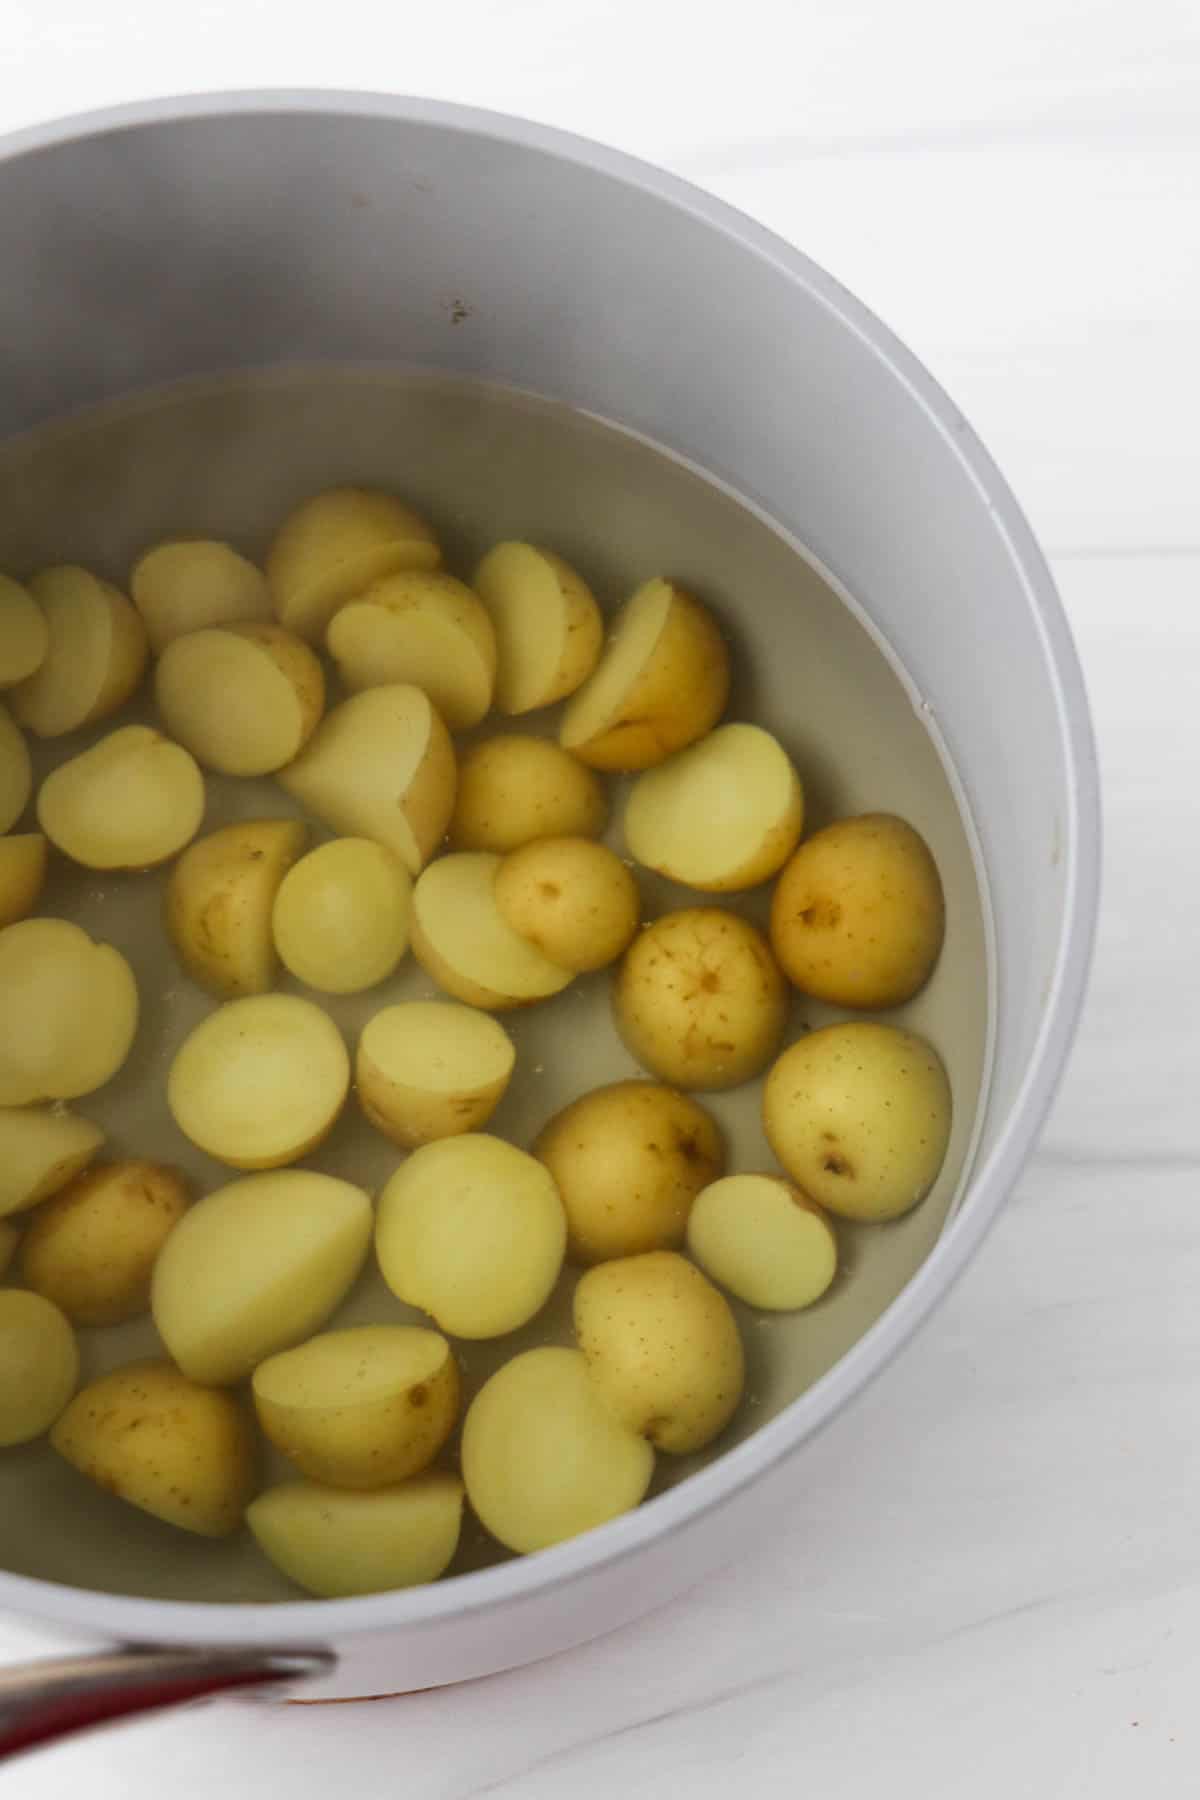 Halved new potatoes in water in saucepan.